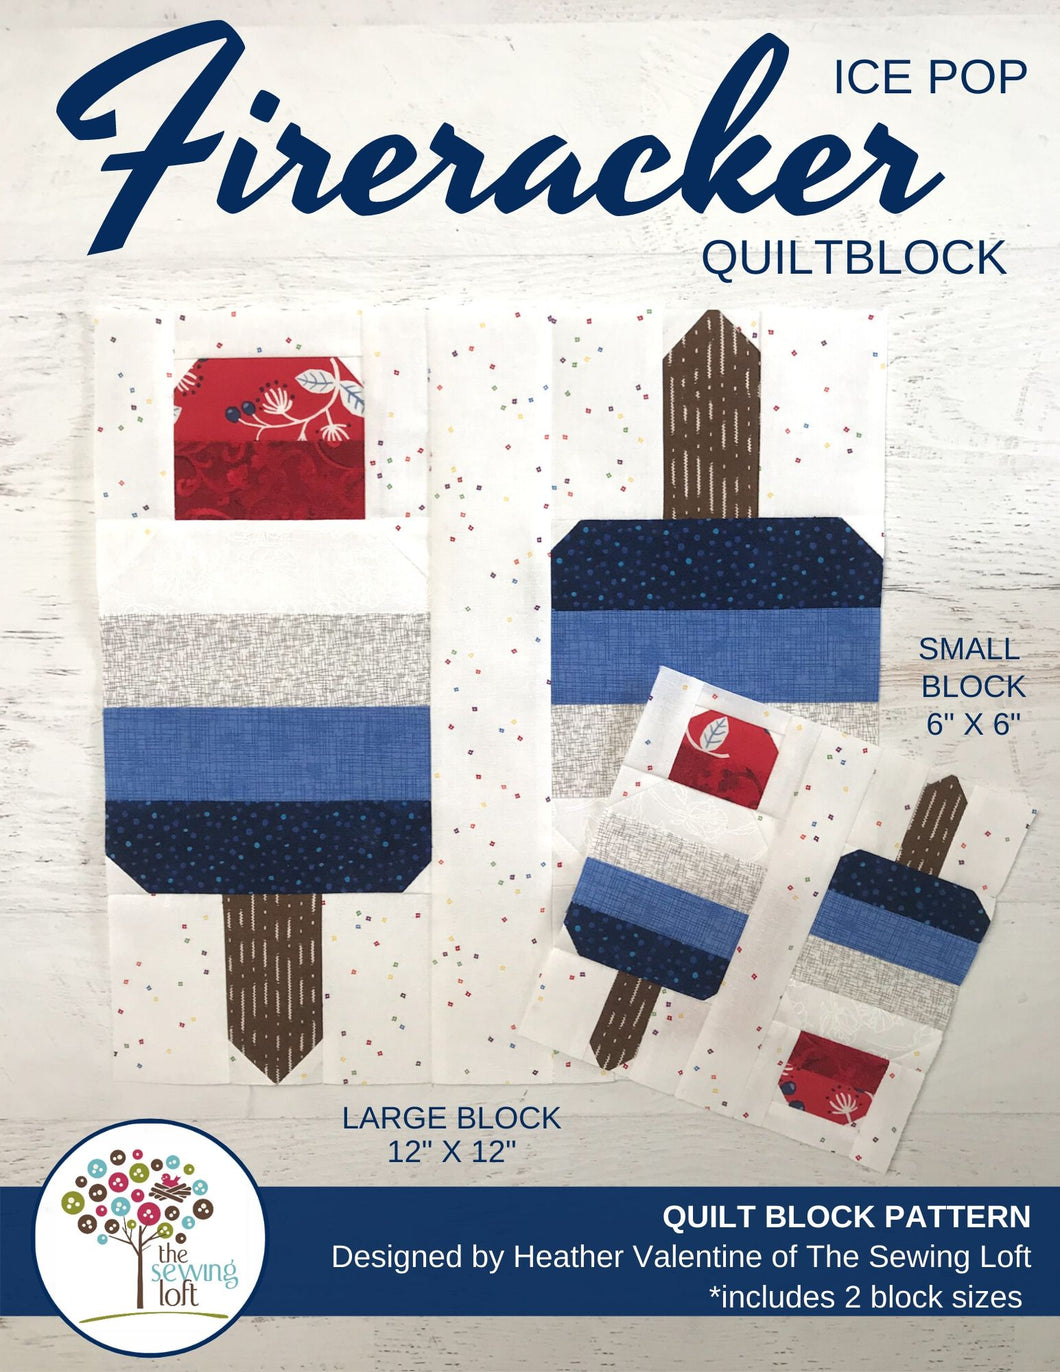 Firecracker Ice Pop Quilt Block Pattern